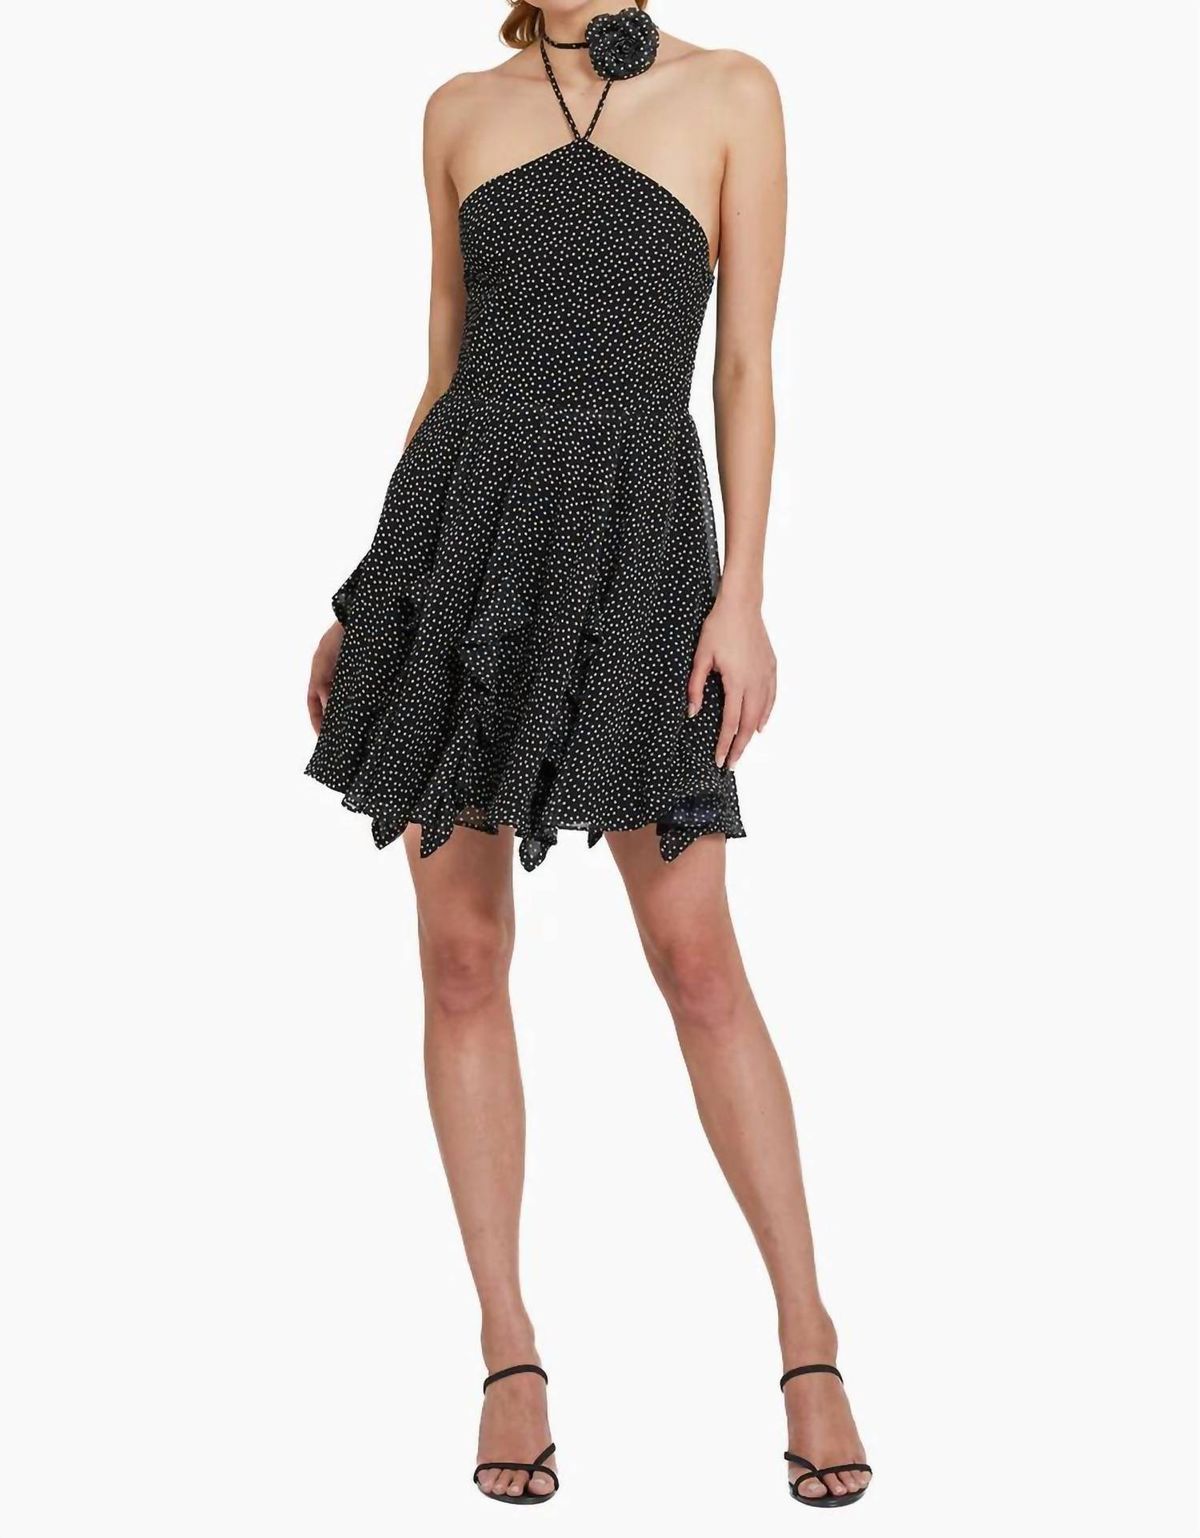 Style 1-708574124-3236 Amanda Uprichard Size S Halter Black Cocktail Dress on Queenly